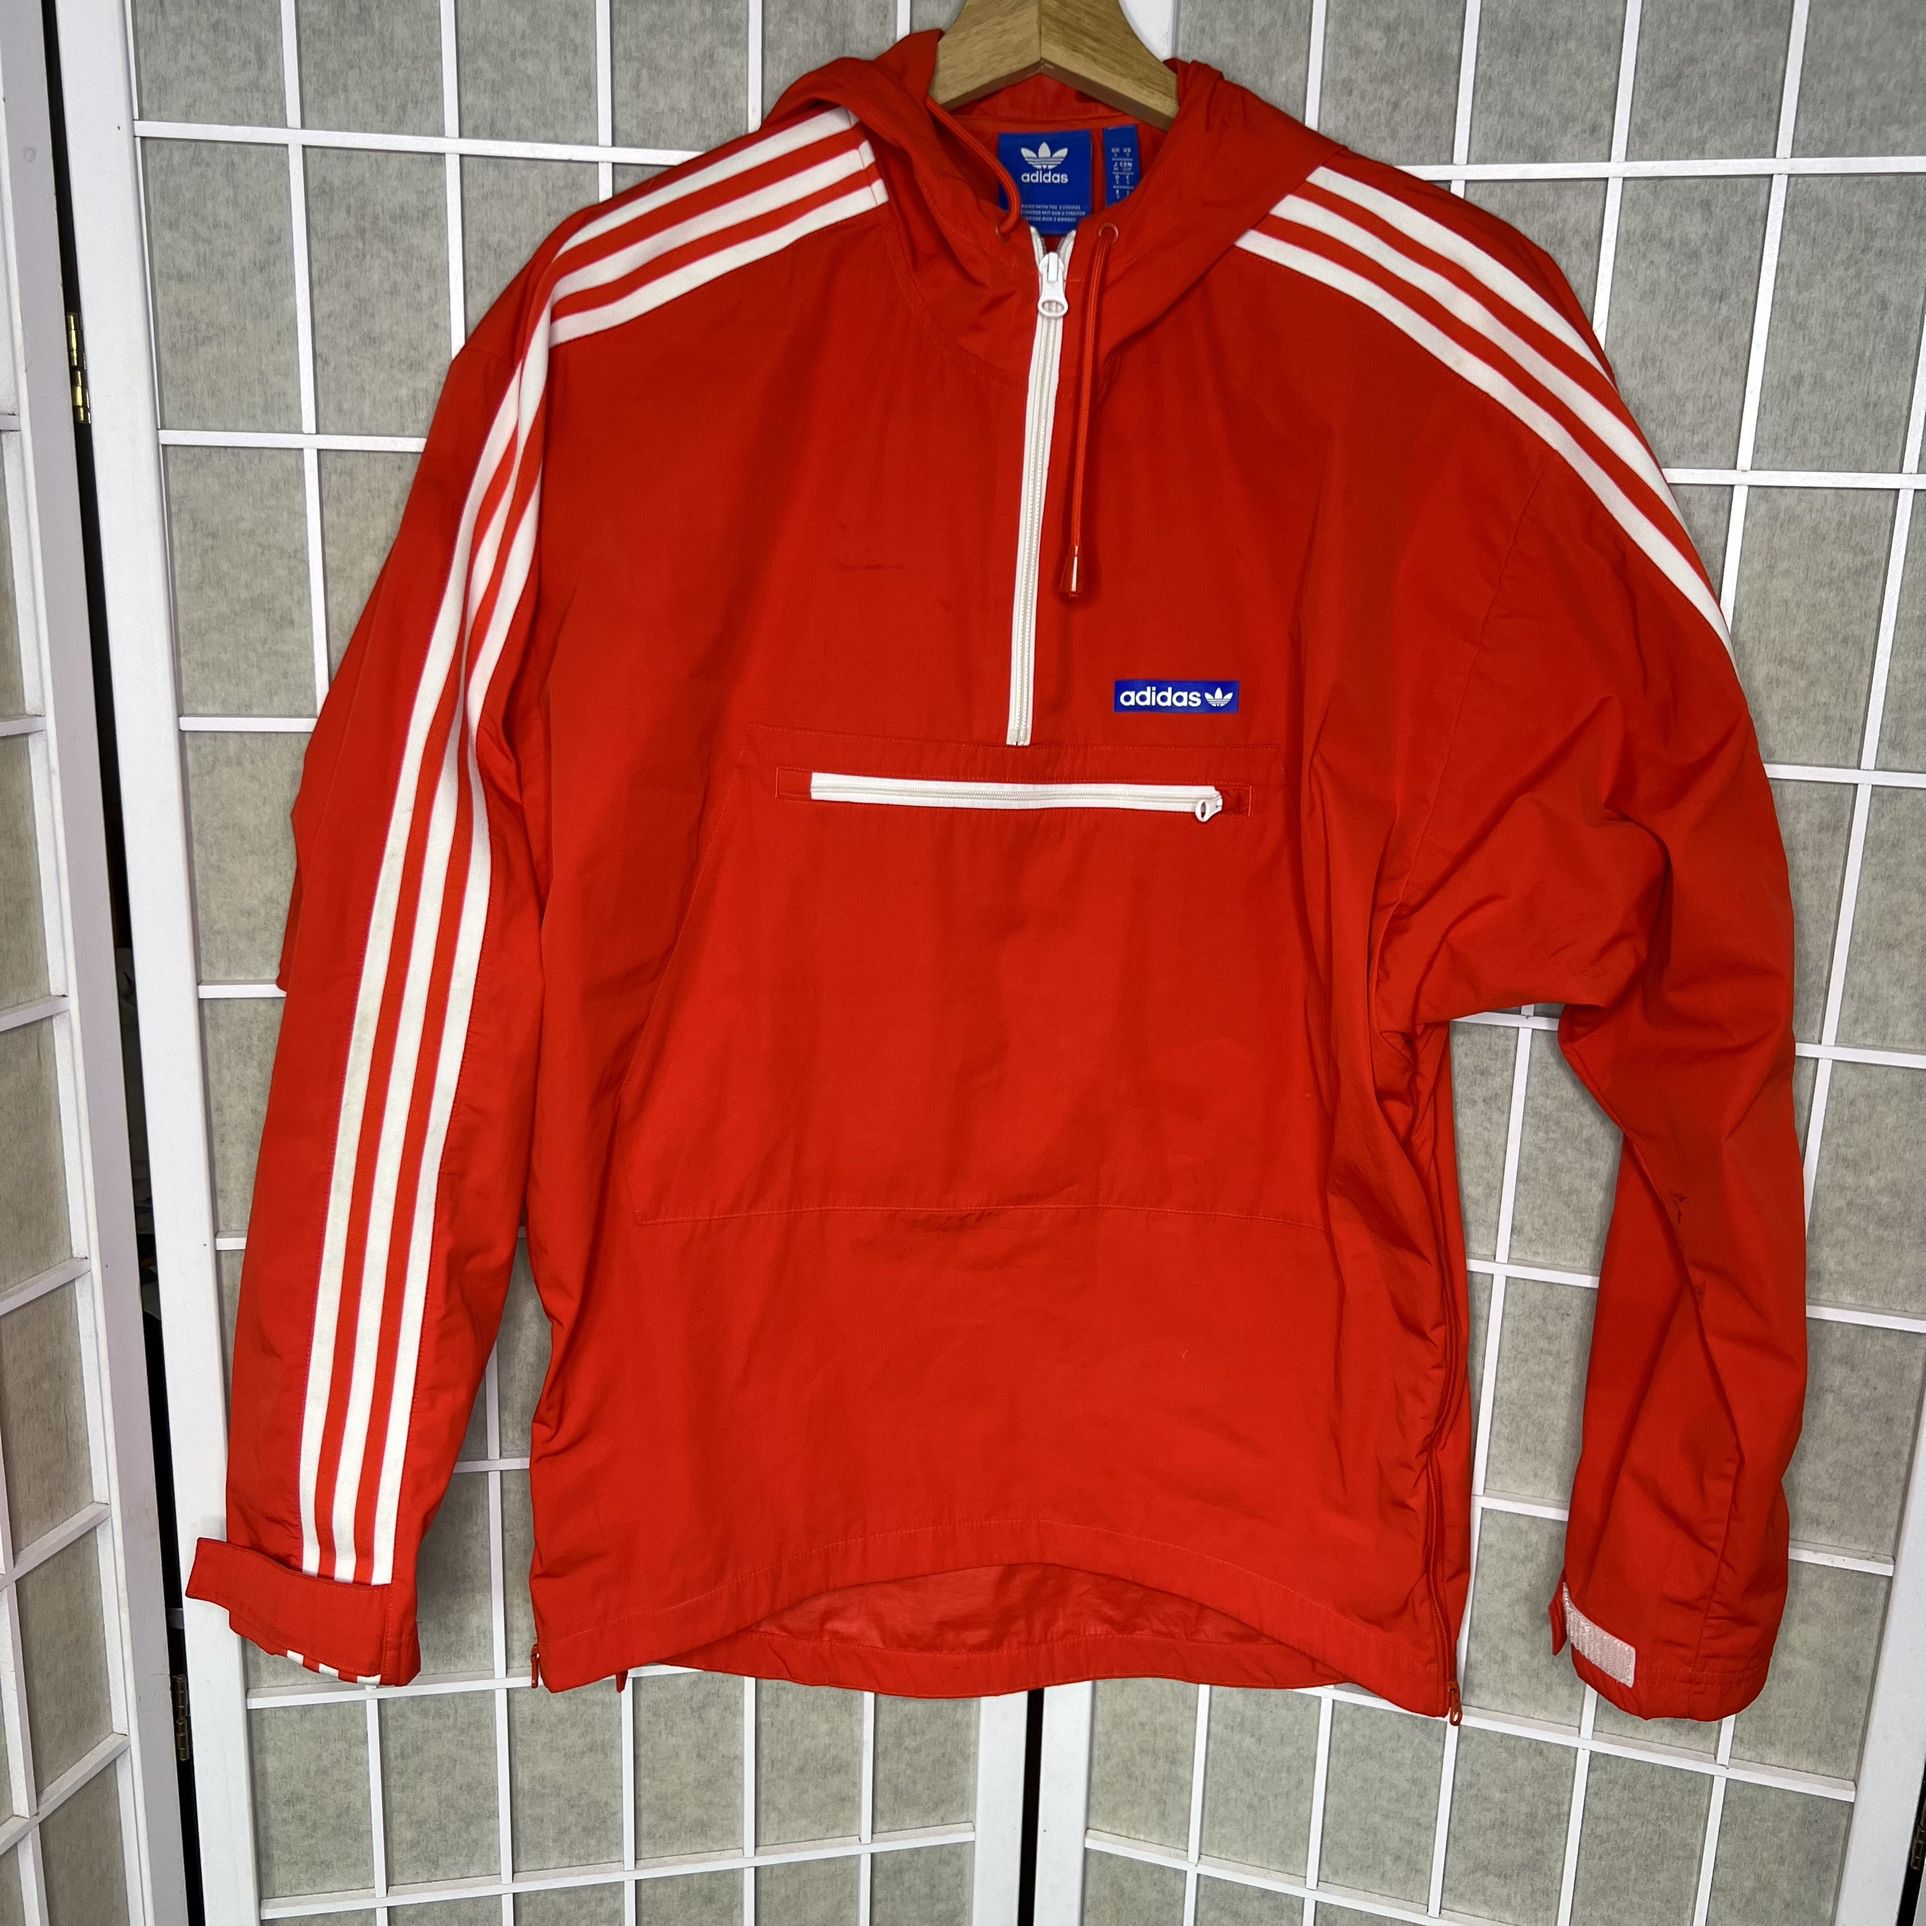 Adidas Originals Tennoji Windbreaker jacket Red size small Pullover anorak Smock.